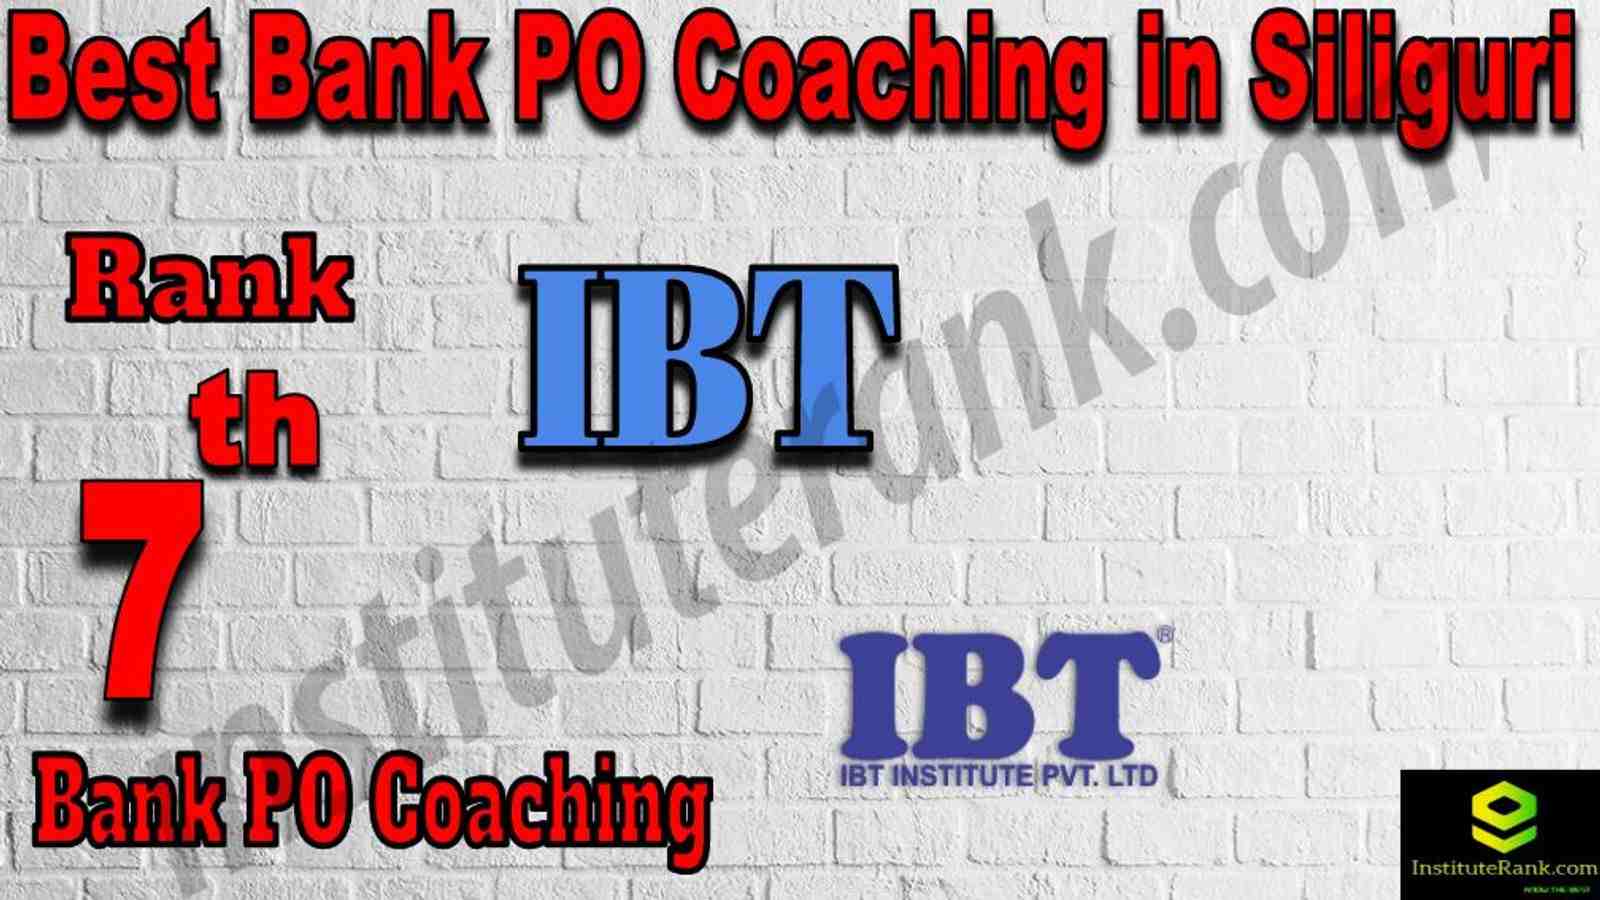 7th Best Bank PO Coaching in Siliguri